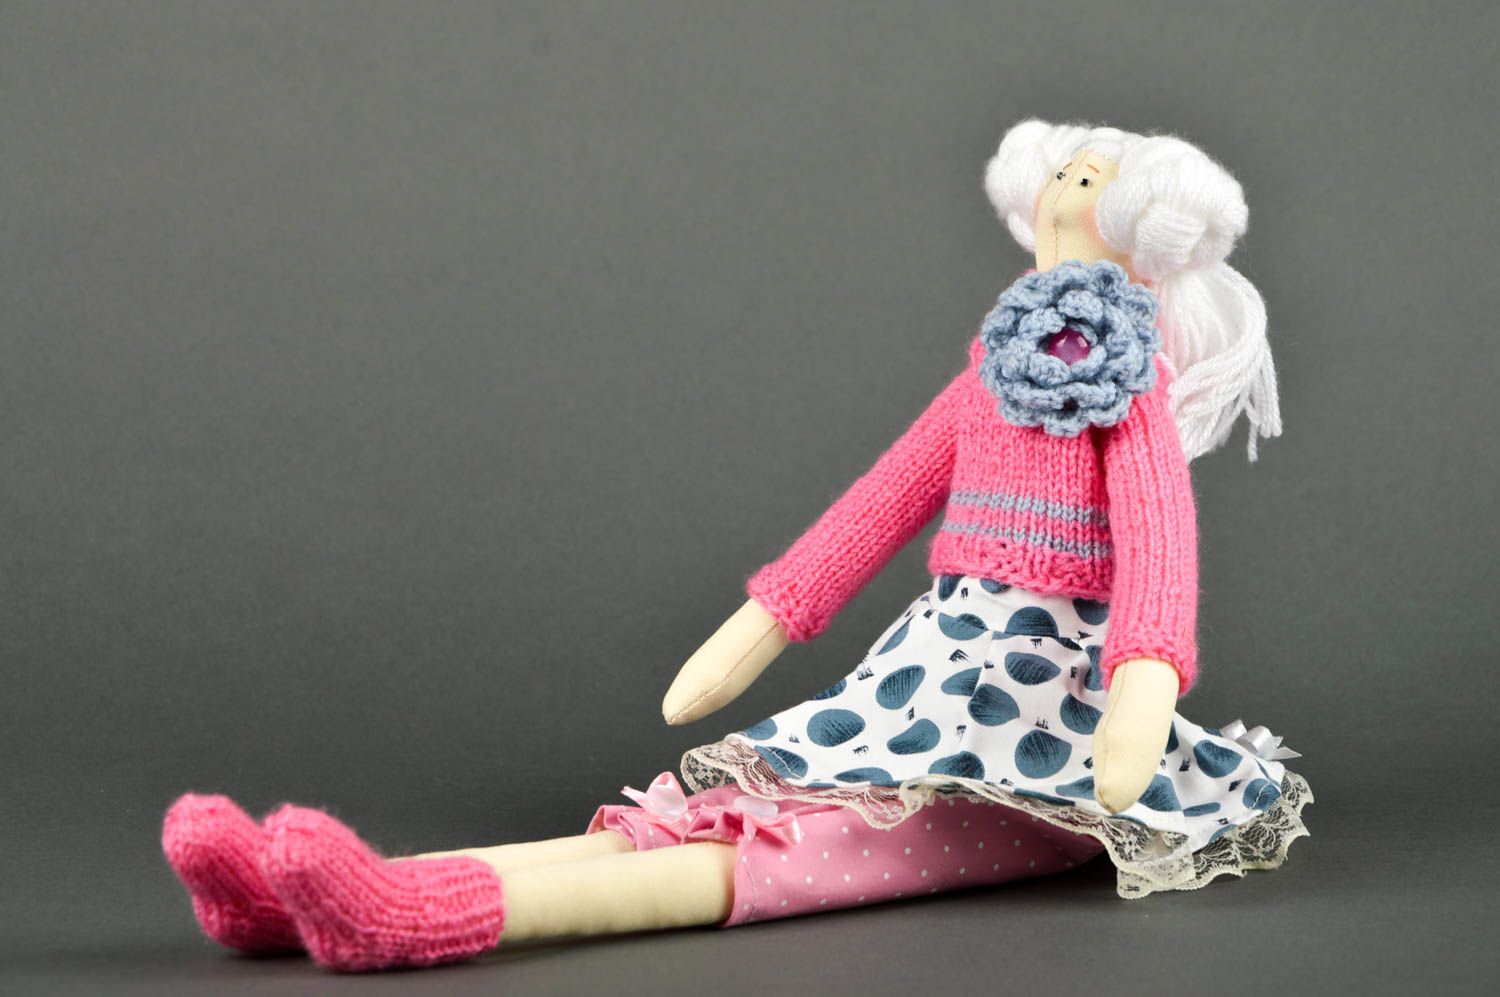 Rag doll handmade fabric toy fabric toy for children nursery decor toys photo 2